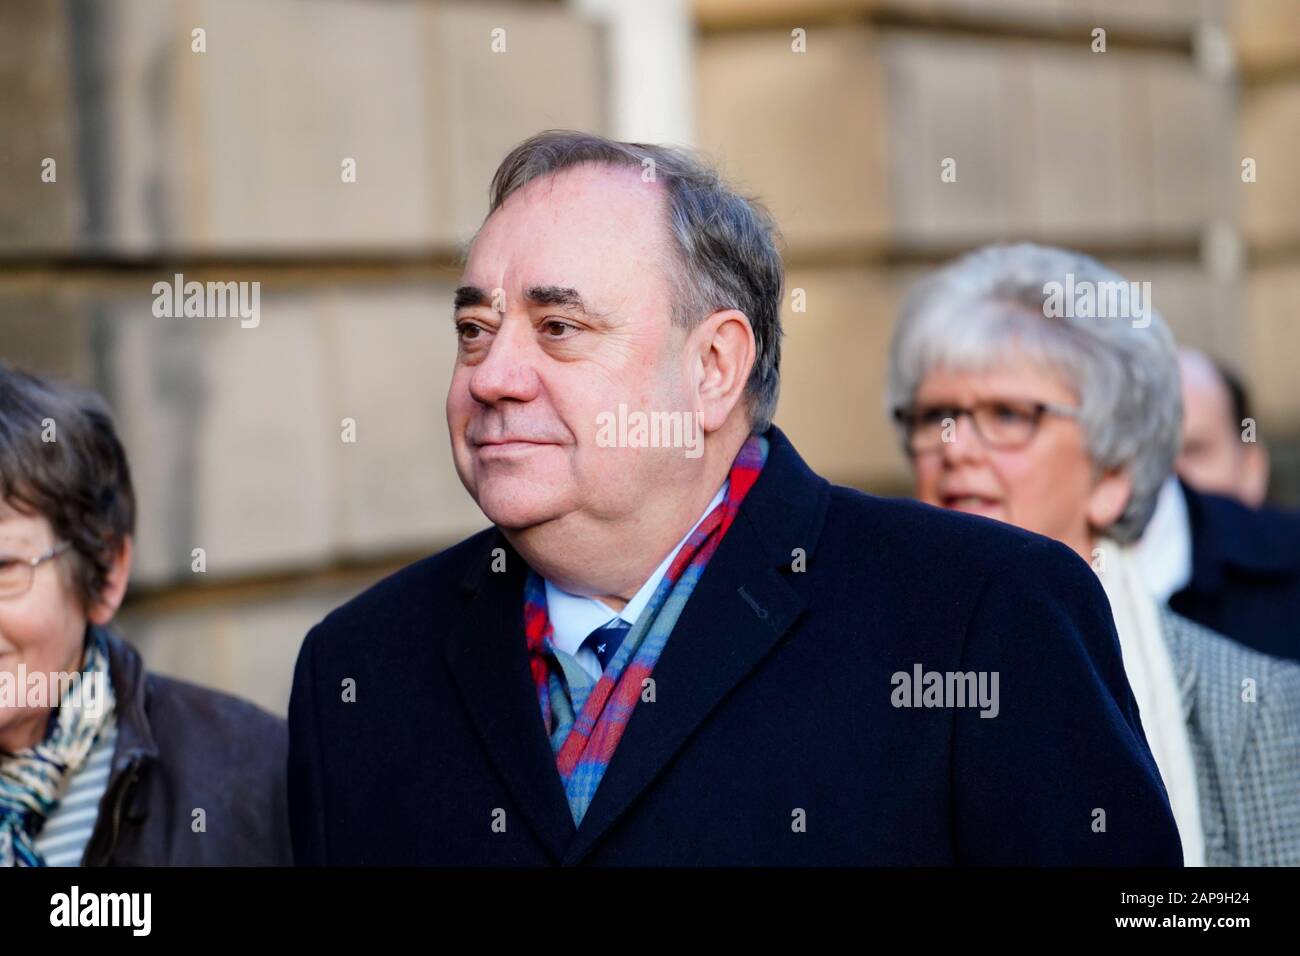 Edinburgh, Scotland, UK. 22 January, 2020. Alex Salmond attends court at High Court in Edinburgh. Iain Masterton/Alamy Live News. Stock Photo